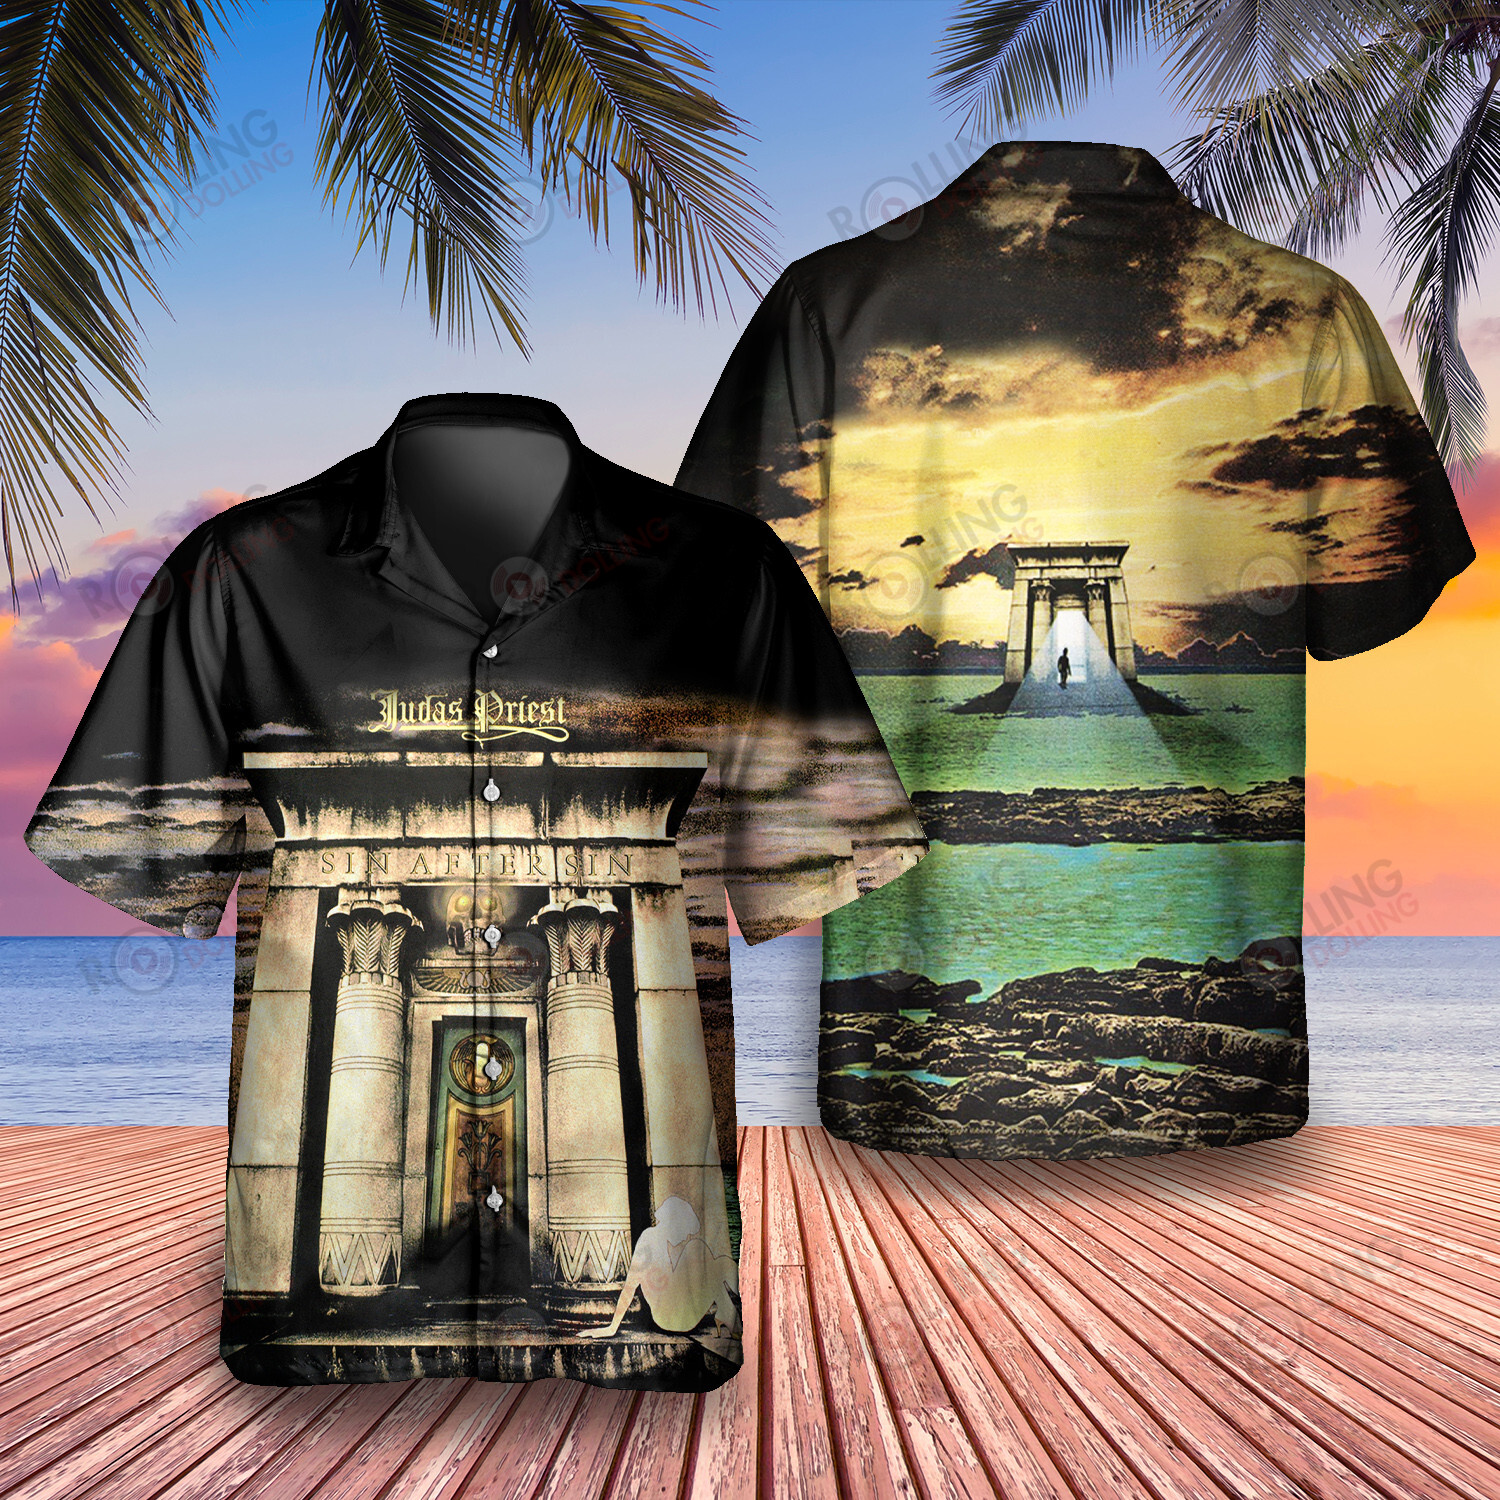 HOT Judas Priest Sin After Sin Album Tropical Shirt2